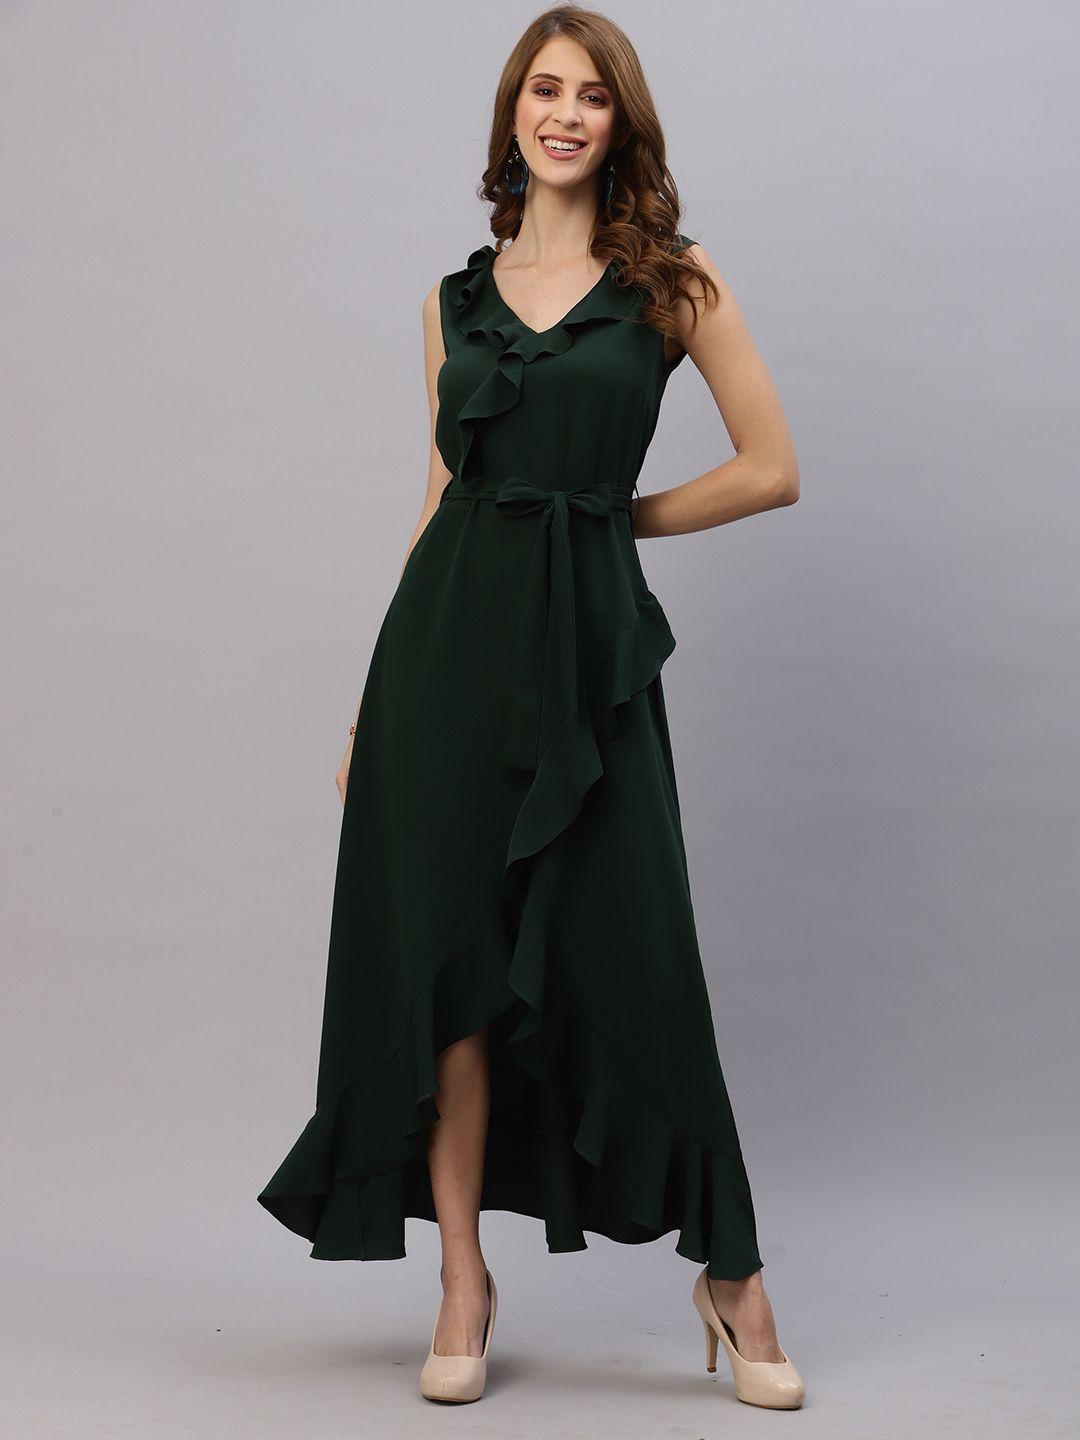 raassio-green-crepe-maxi-dress